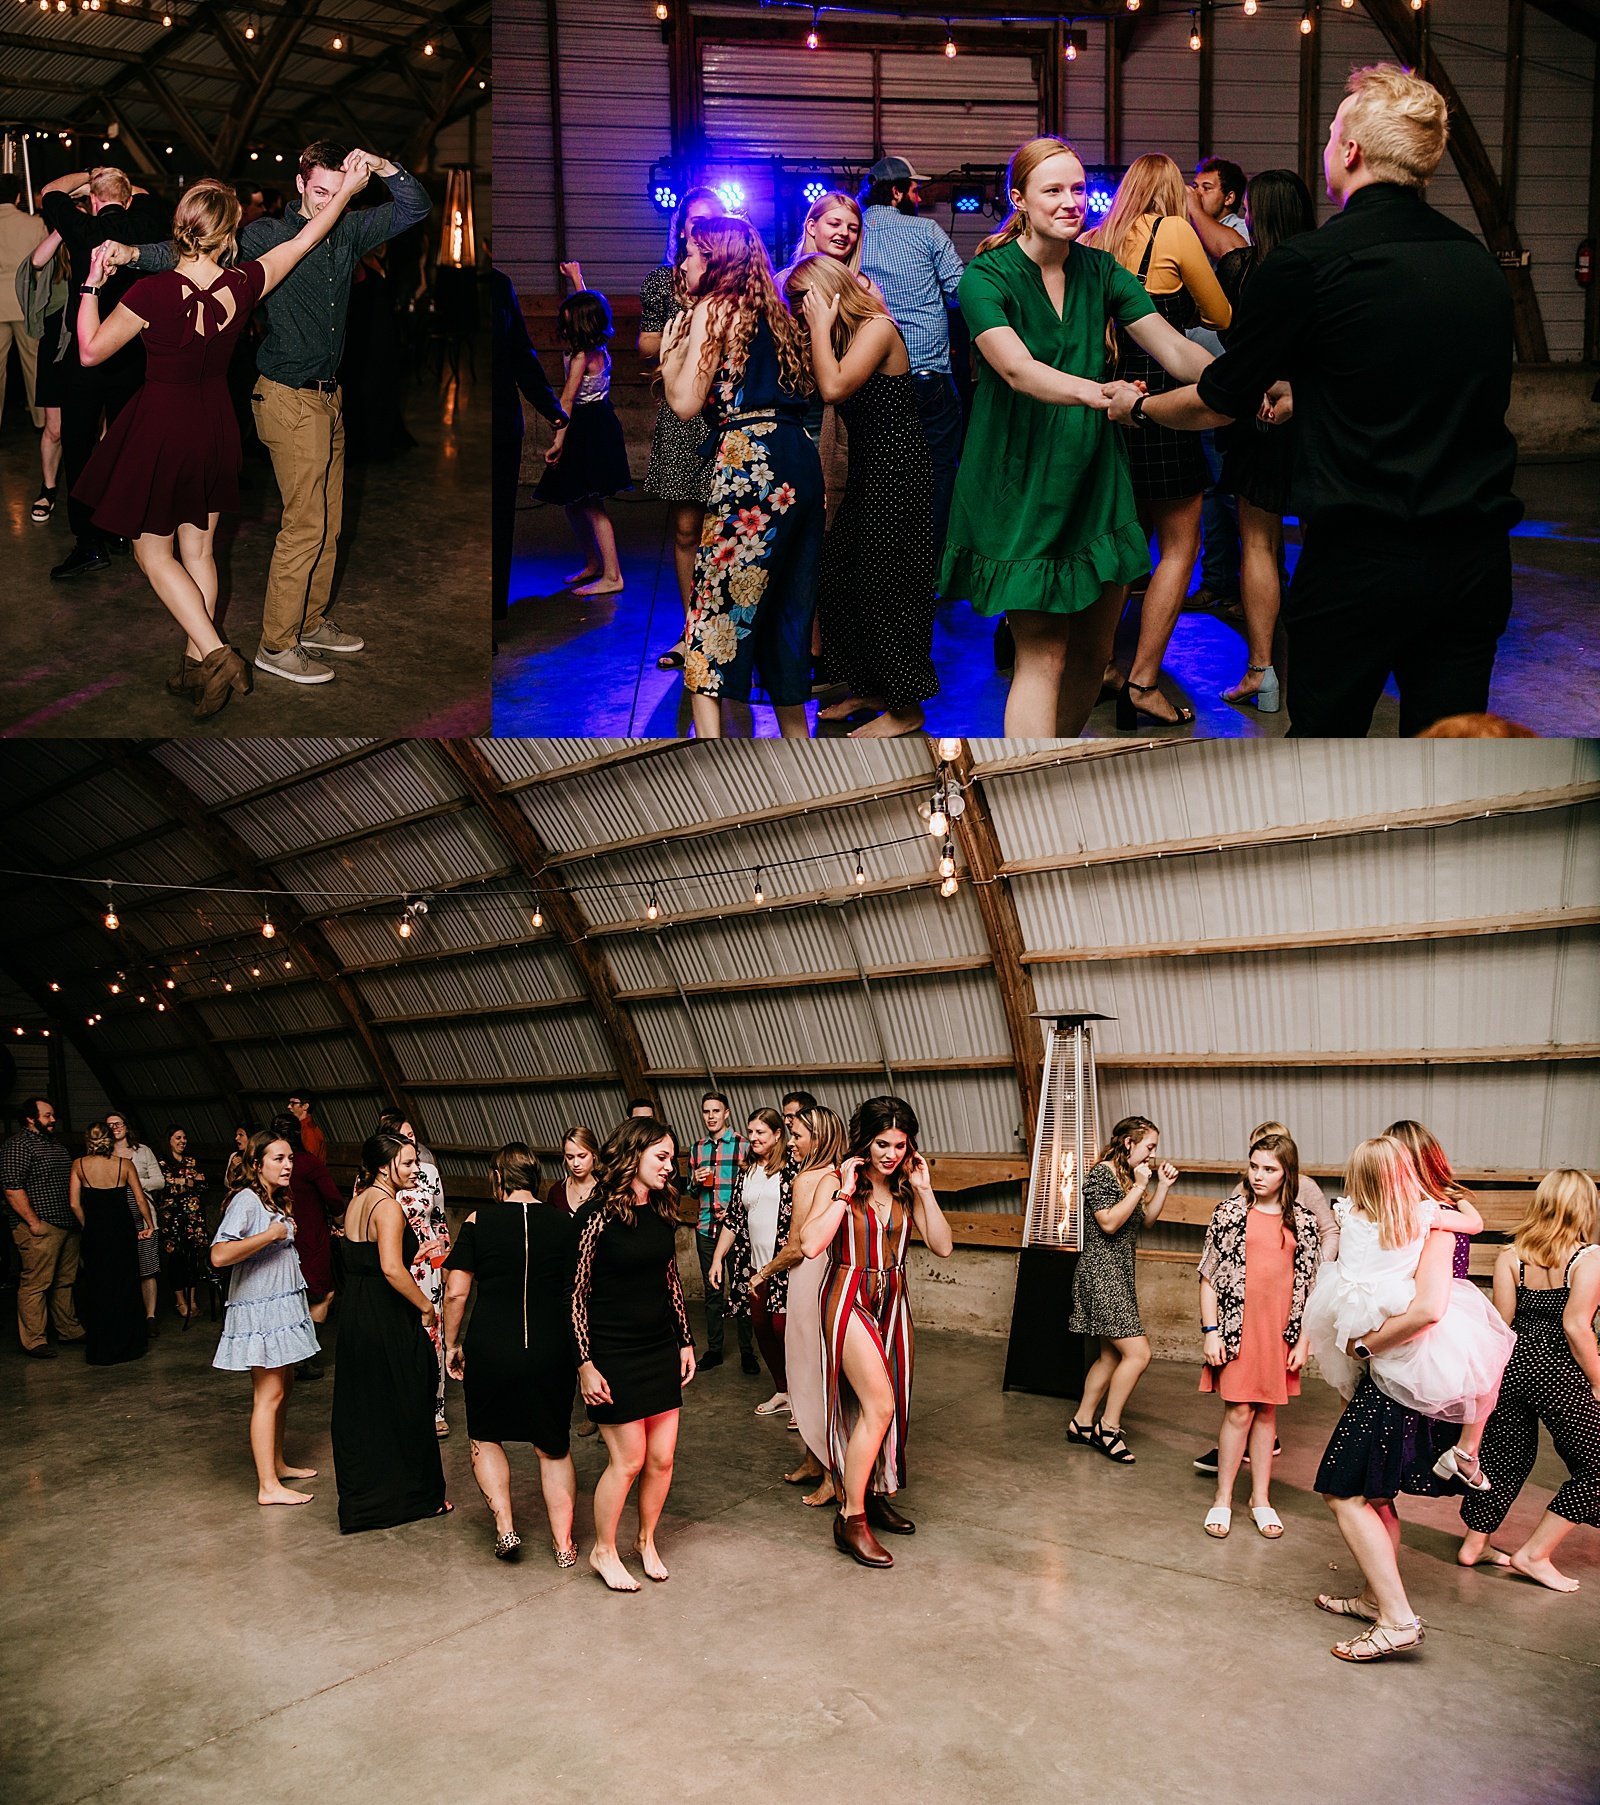  Guests dancing in a silo style reception dance floor by Minneapolis wedding photographer, McKenzie Berquam  